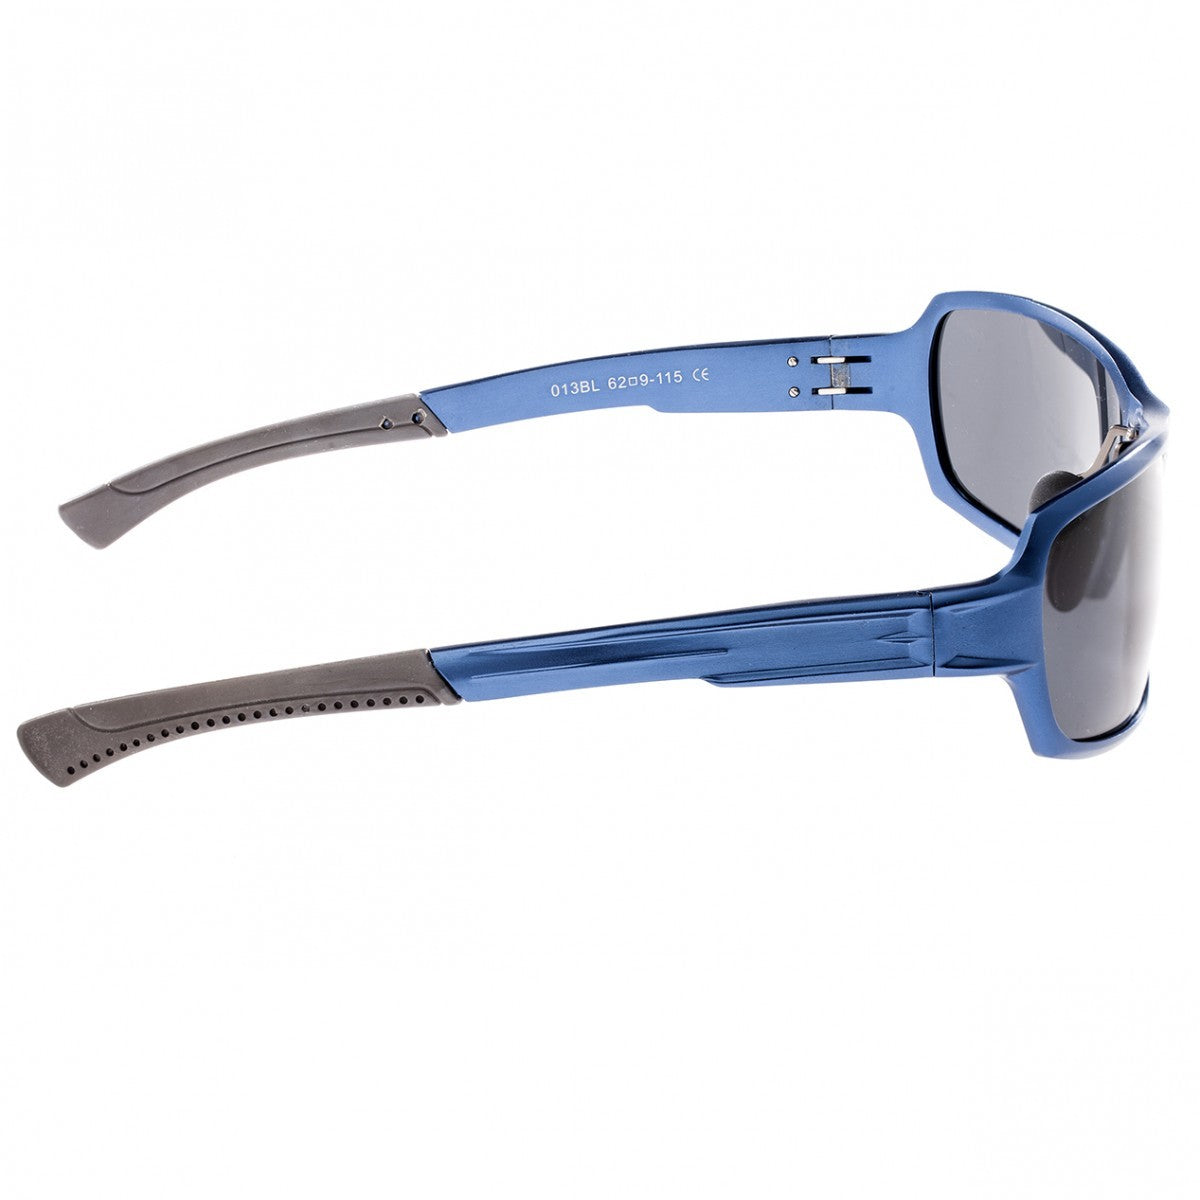 Breed Cosmos Aluminium Polarized Sunglasses - Blue/Black - BSG013BL